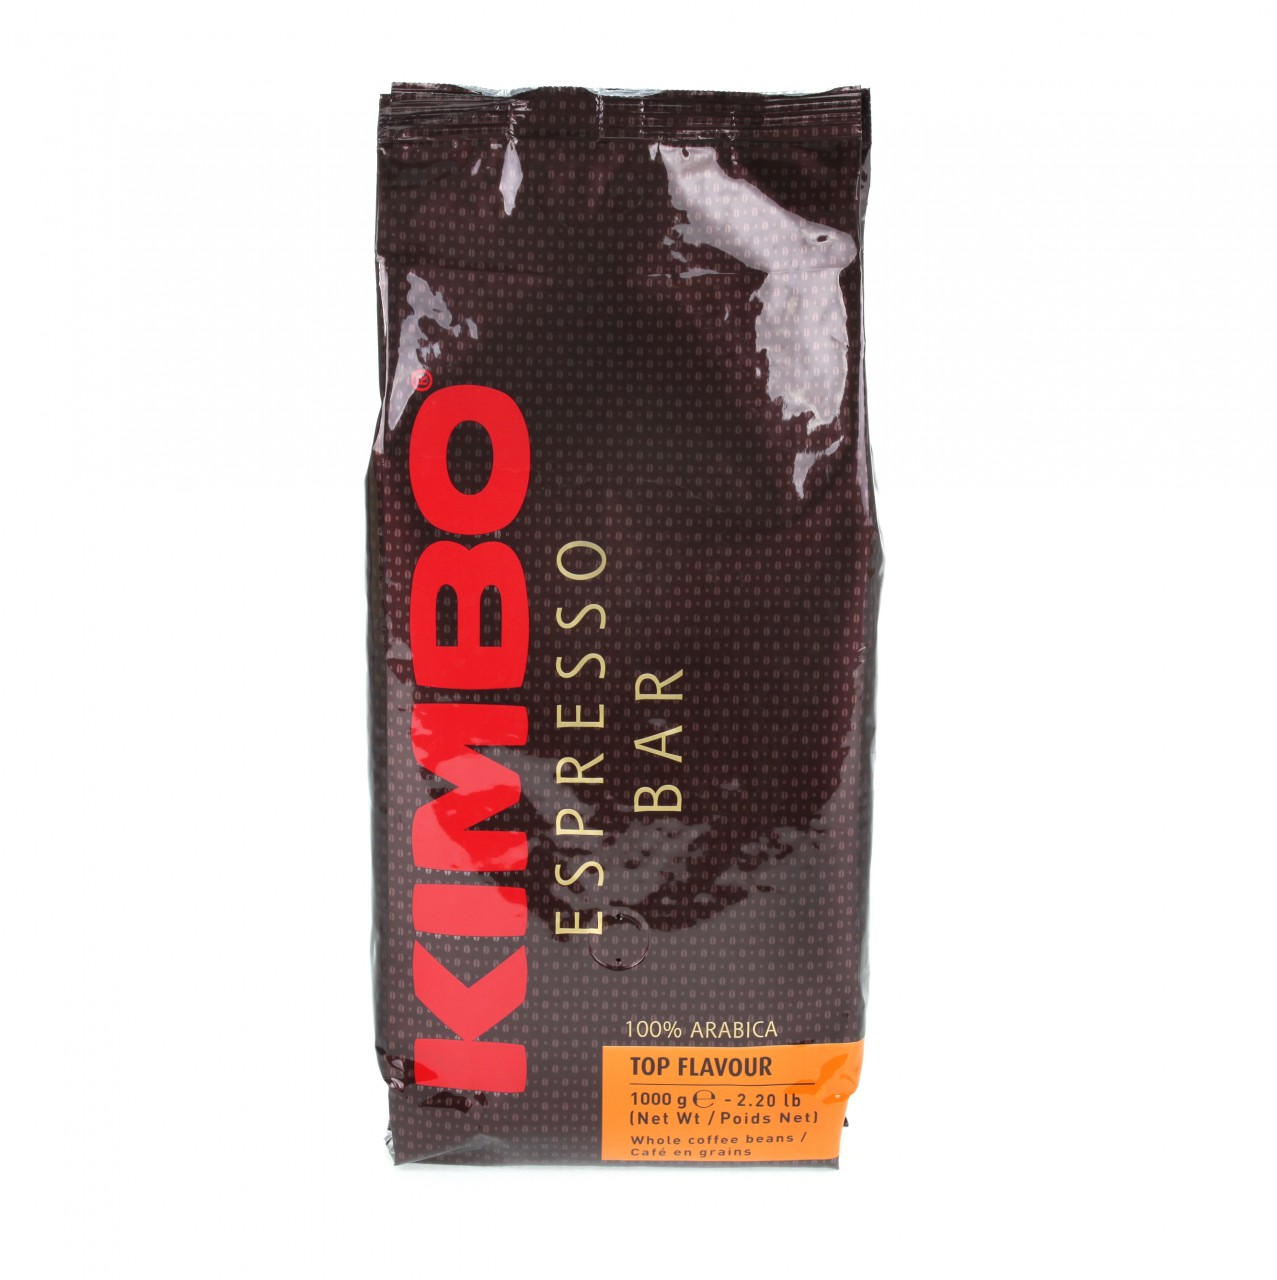 Kimbo Top Flavour